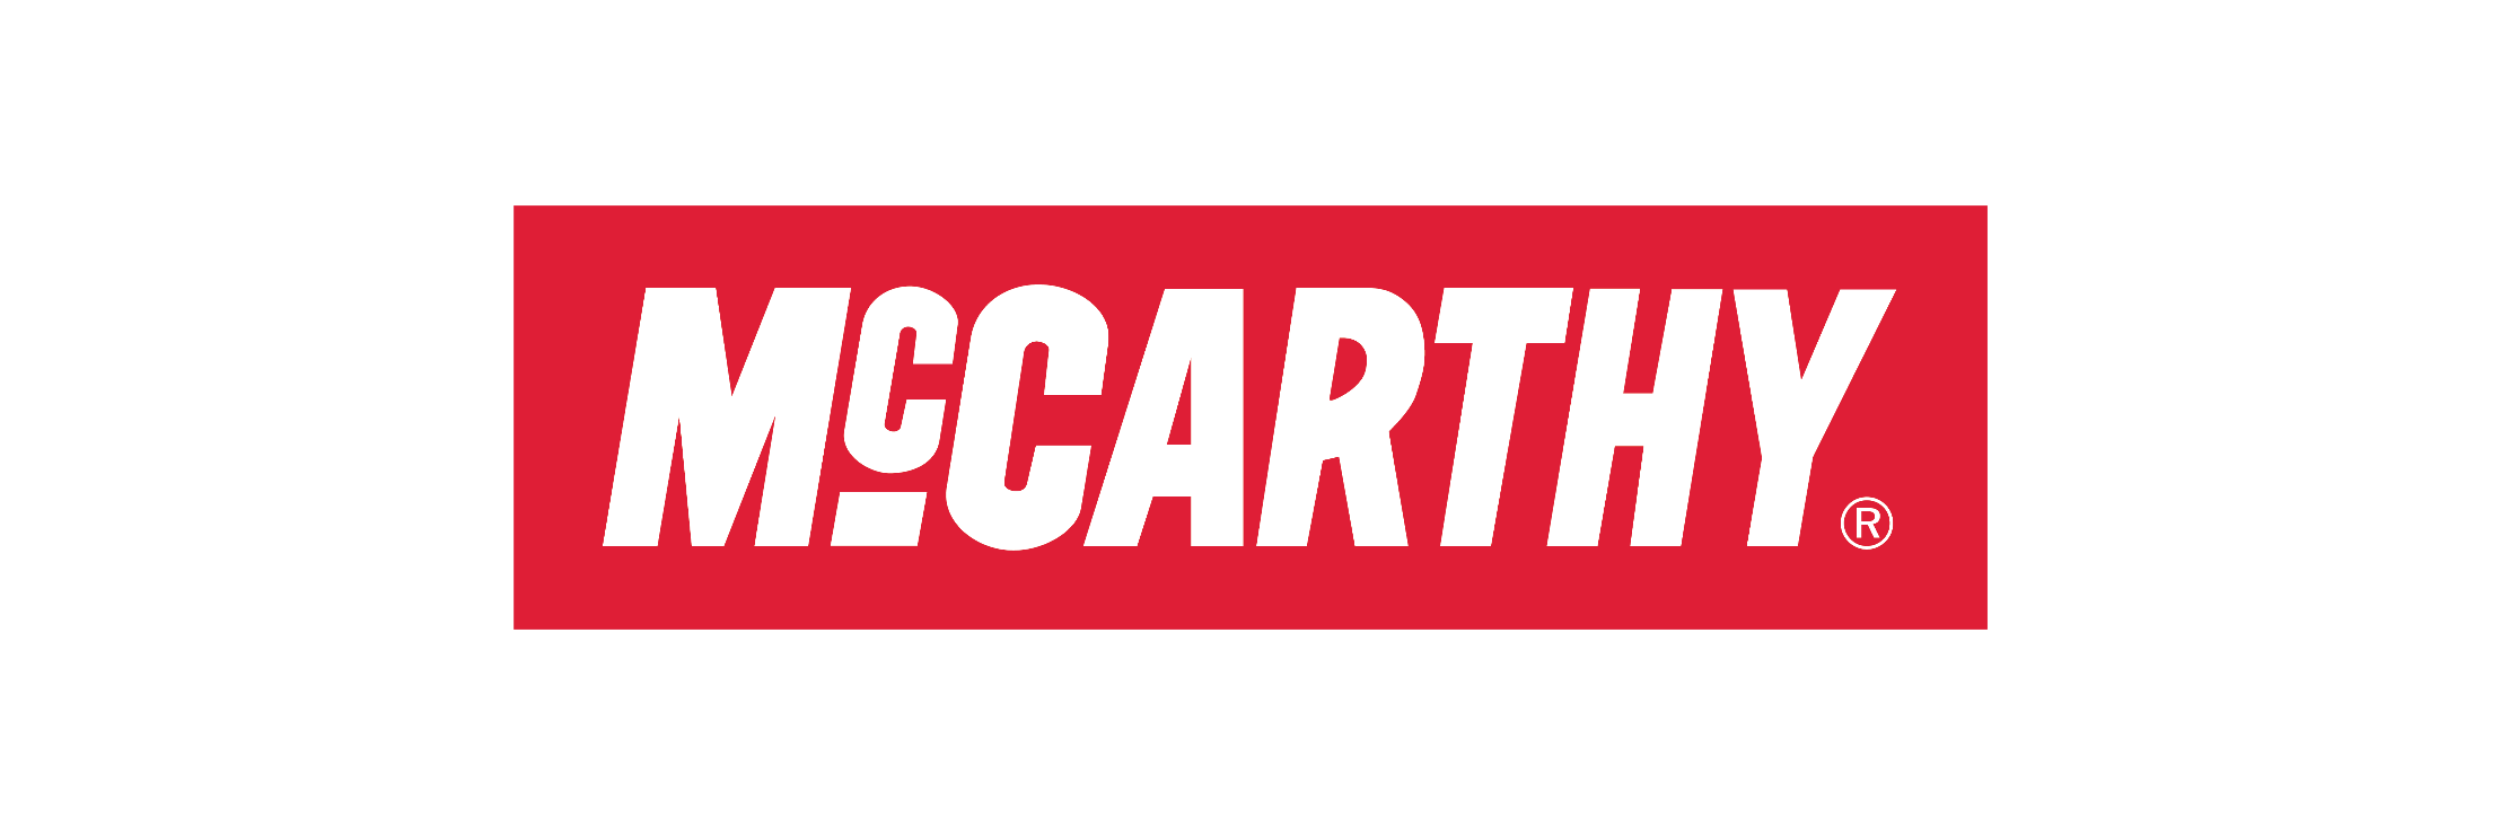 McCarthy Building Companies, Inc. Logo